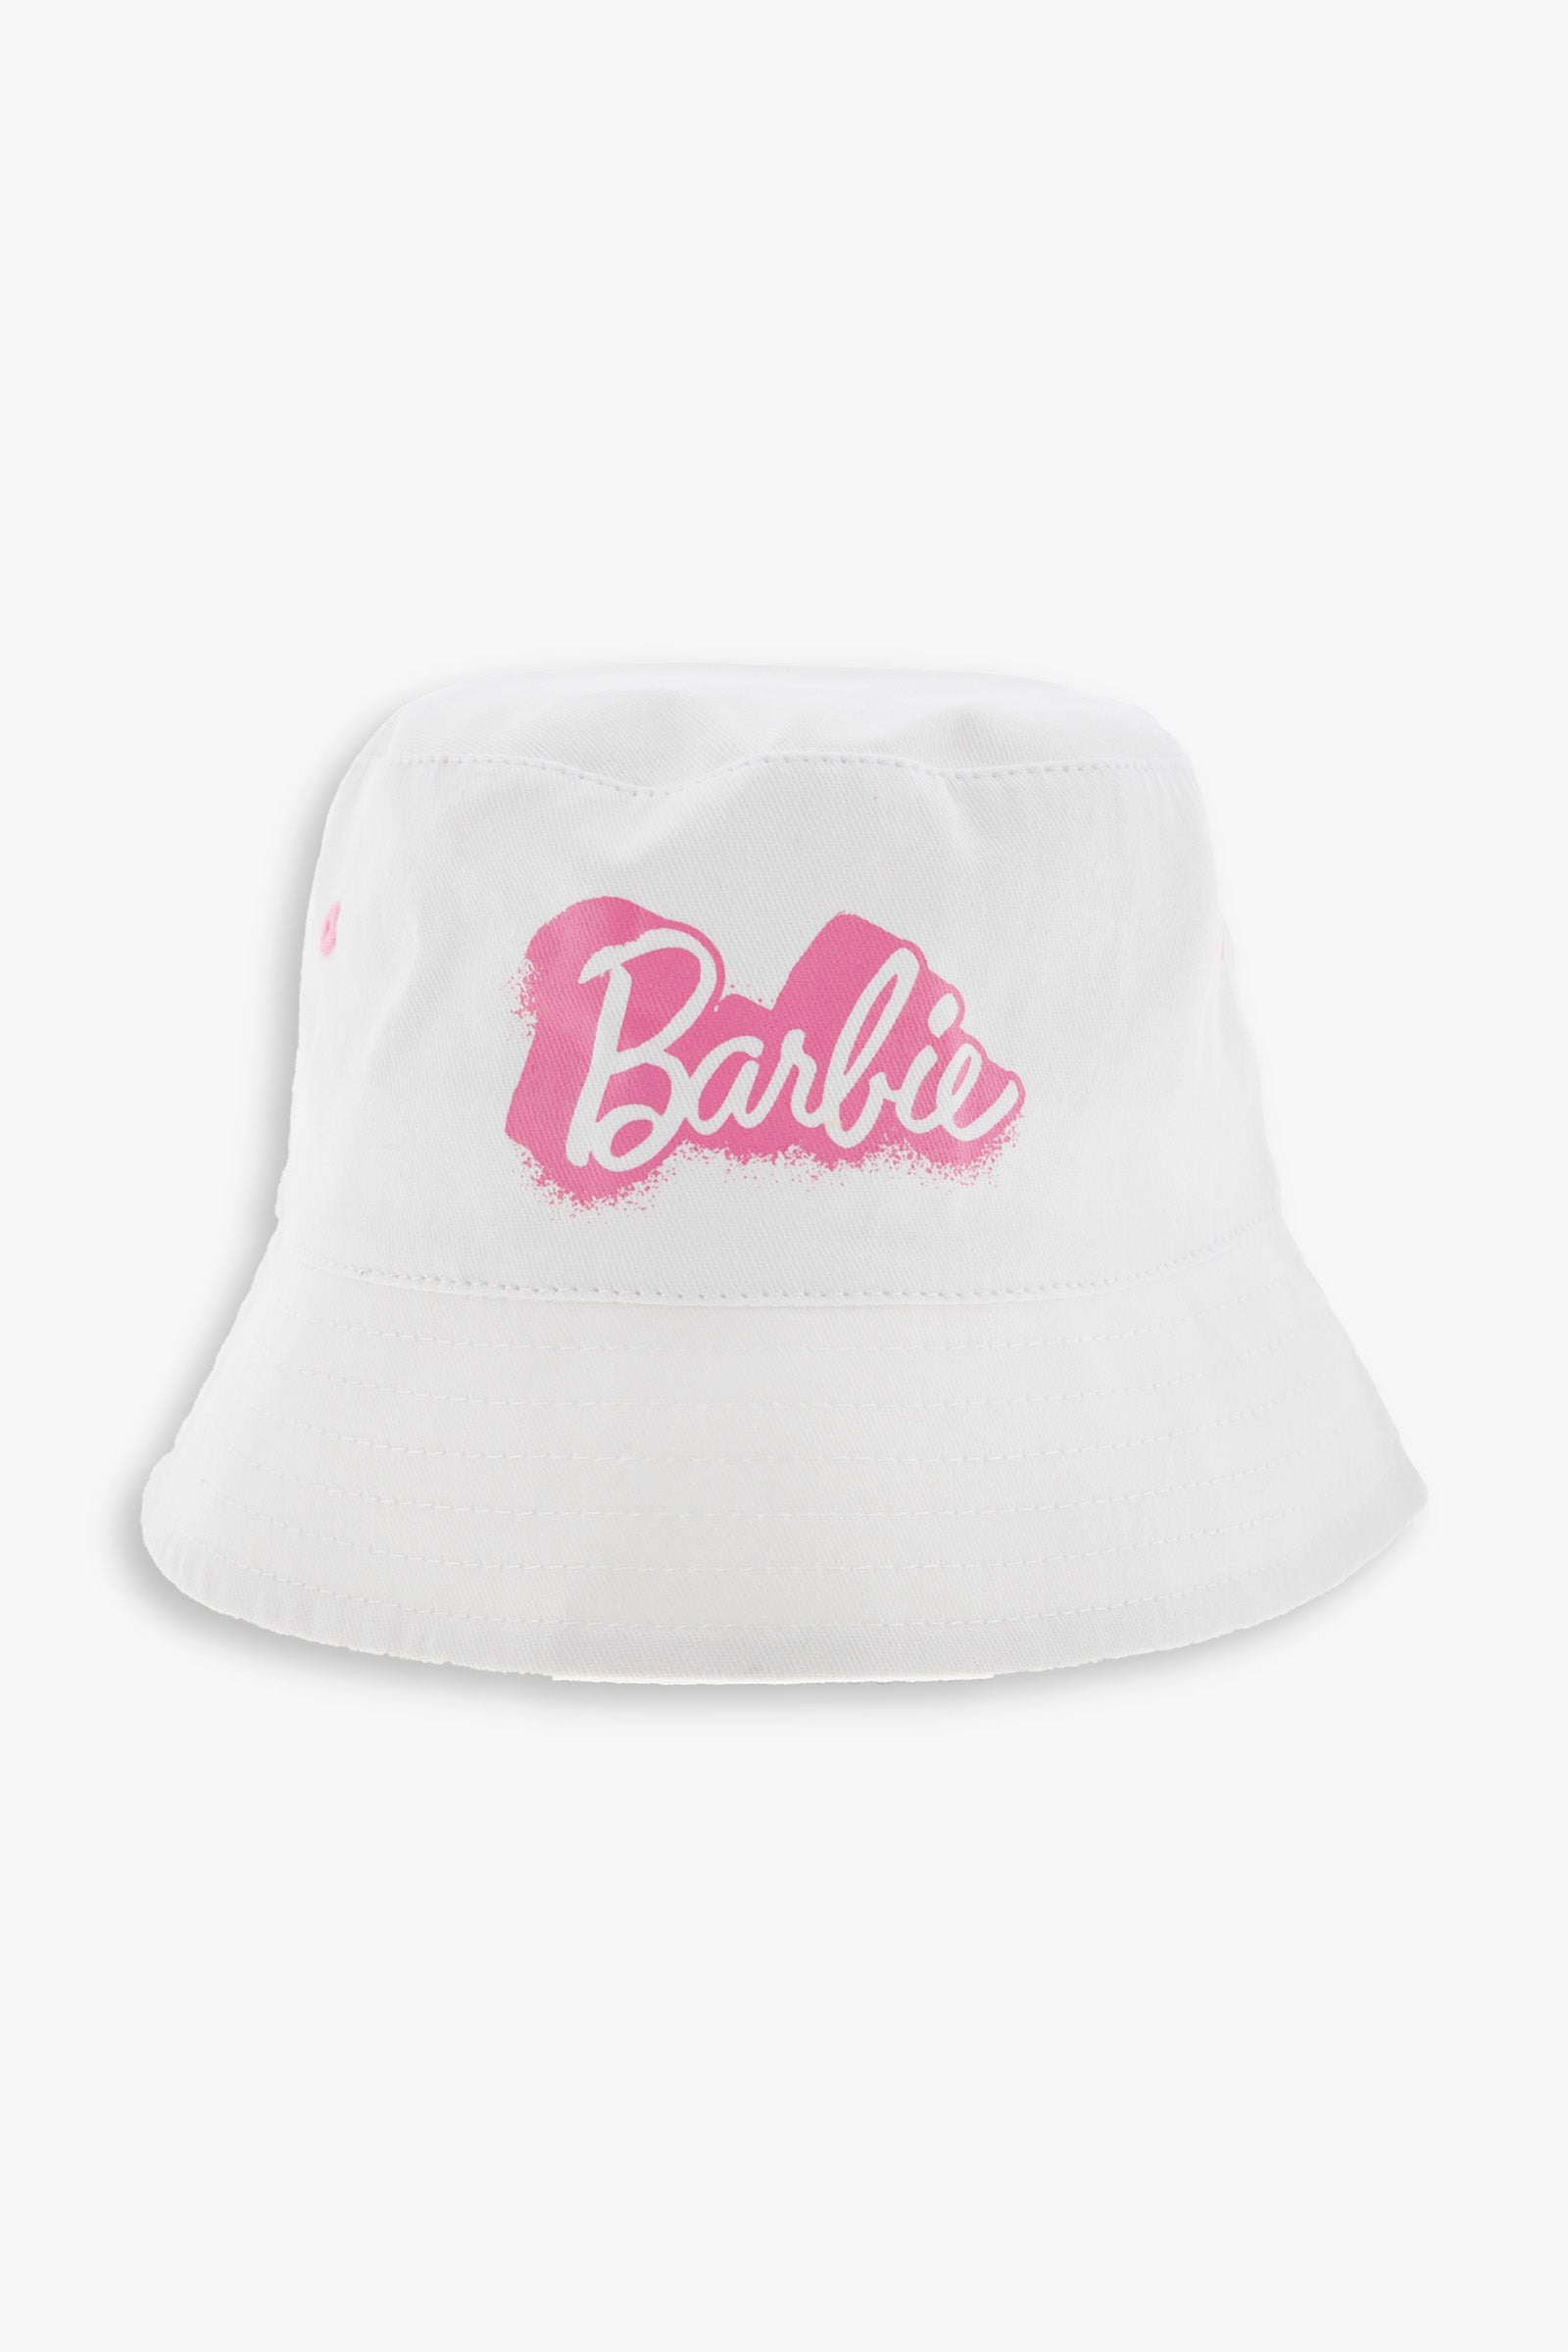 Gertex Barbie Youth Girls Limited Edition White Bucket Hat